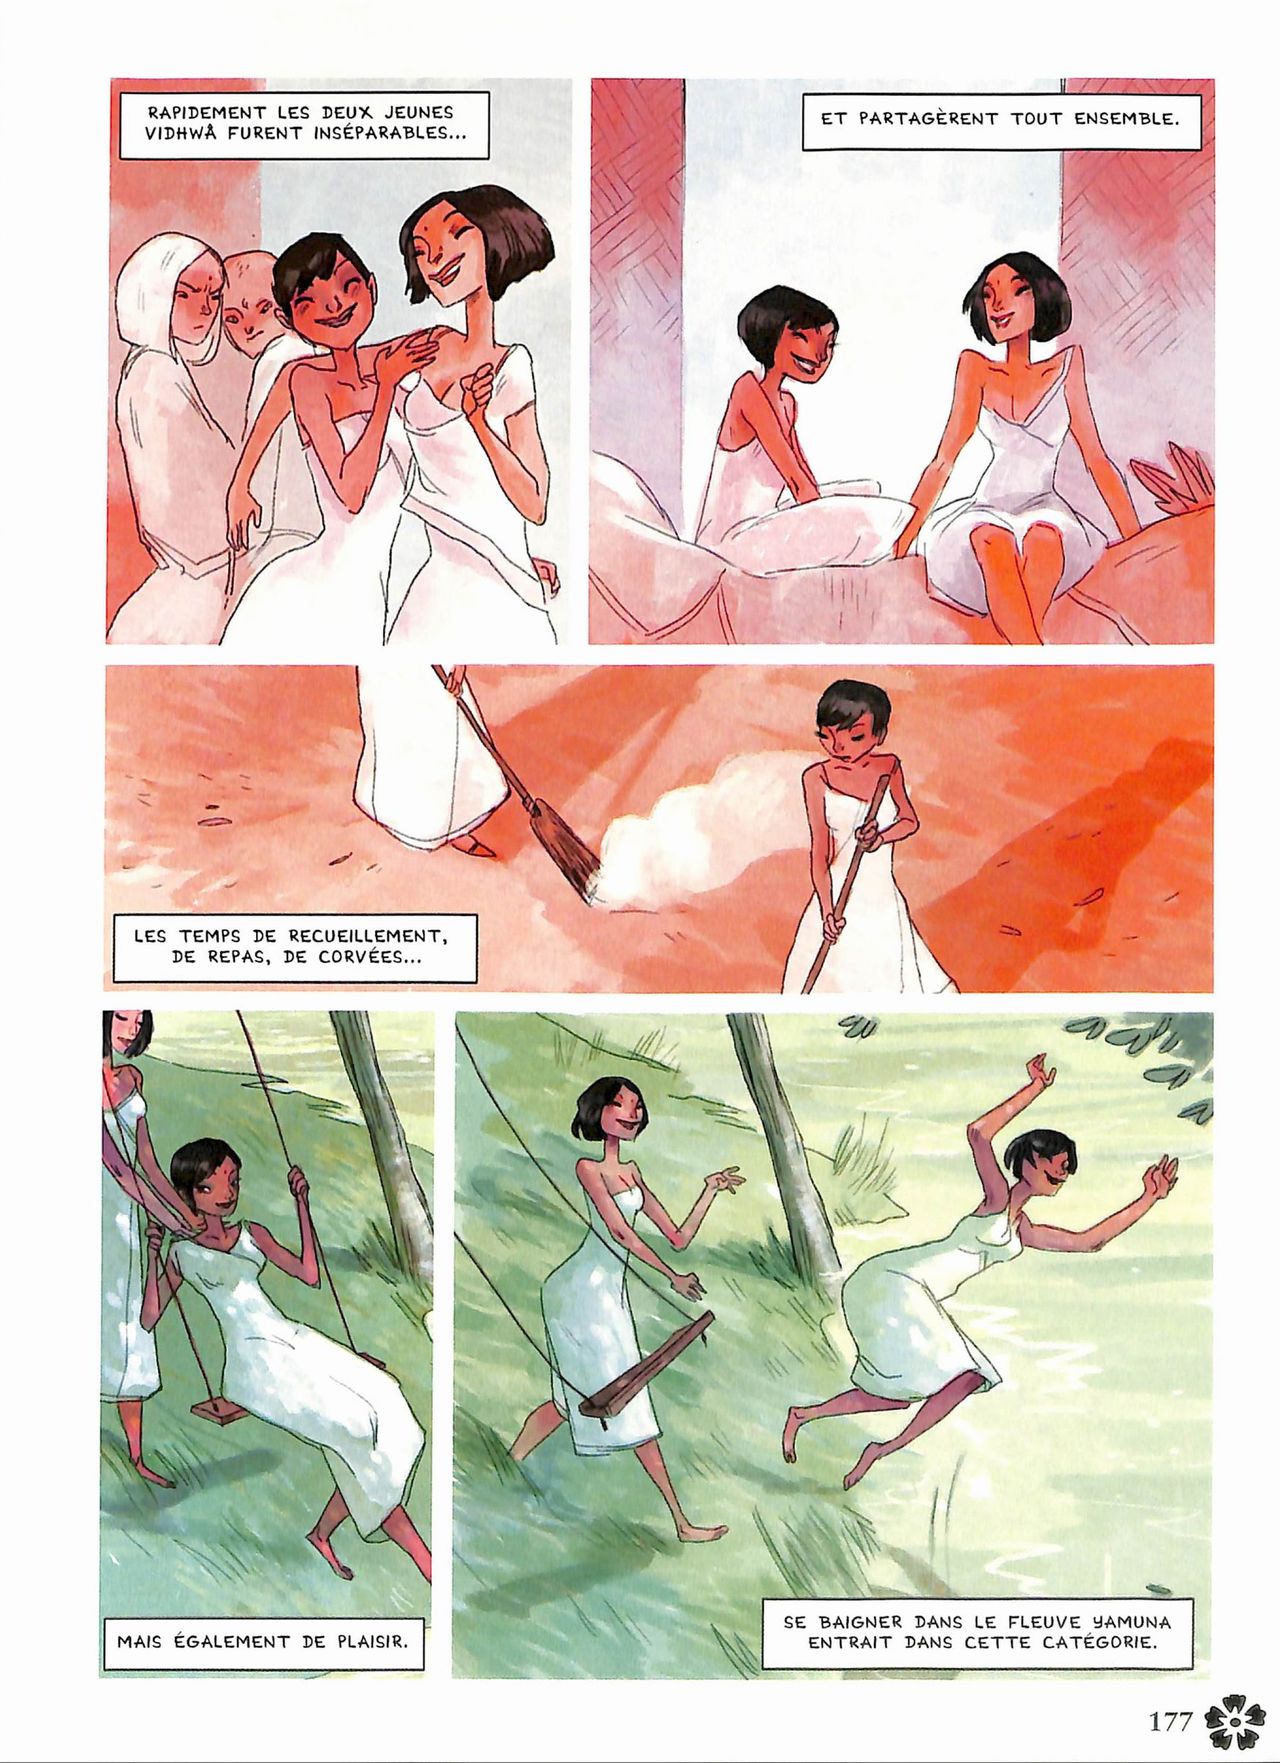 Kama Sutra en bandes dessinées - Kama Sutra with Comics numero d'image 177